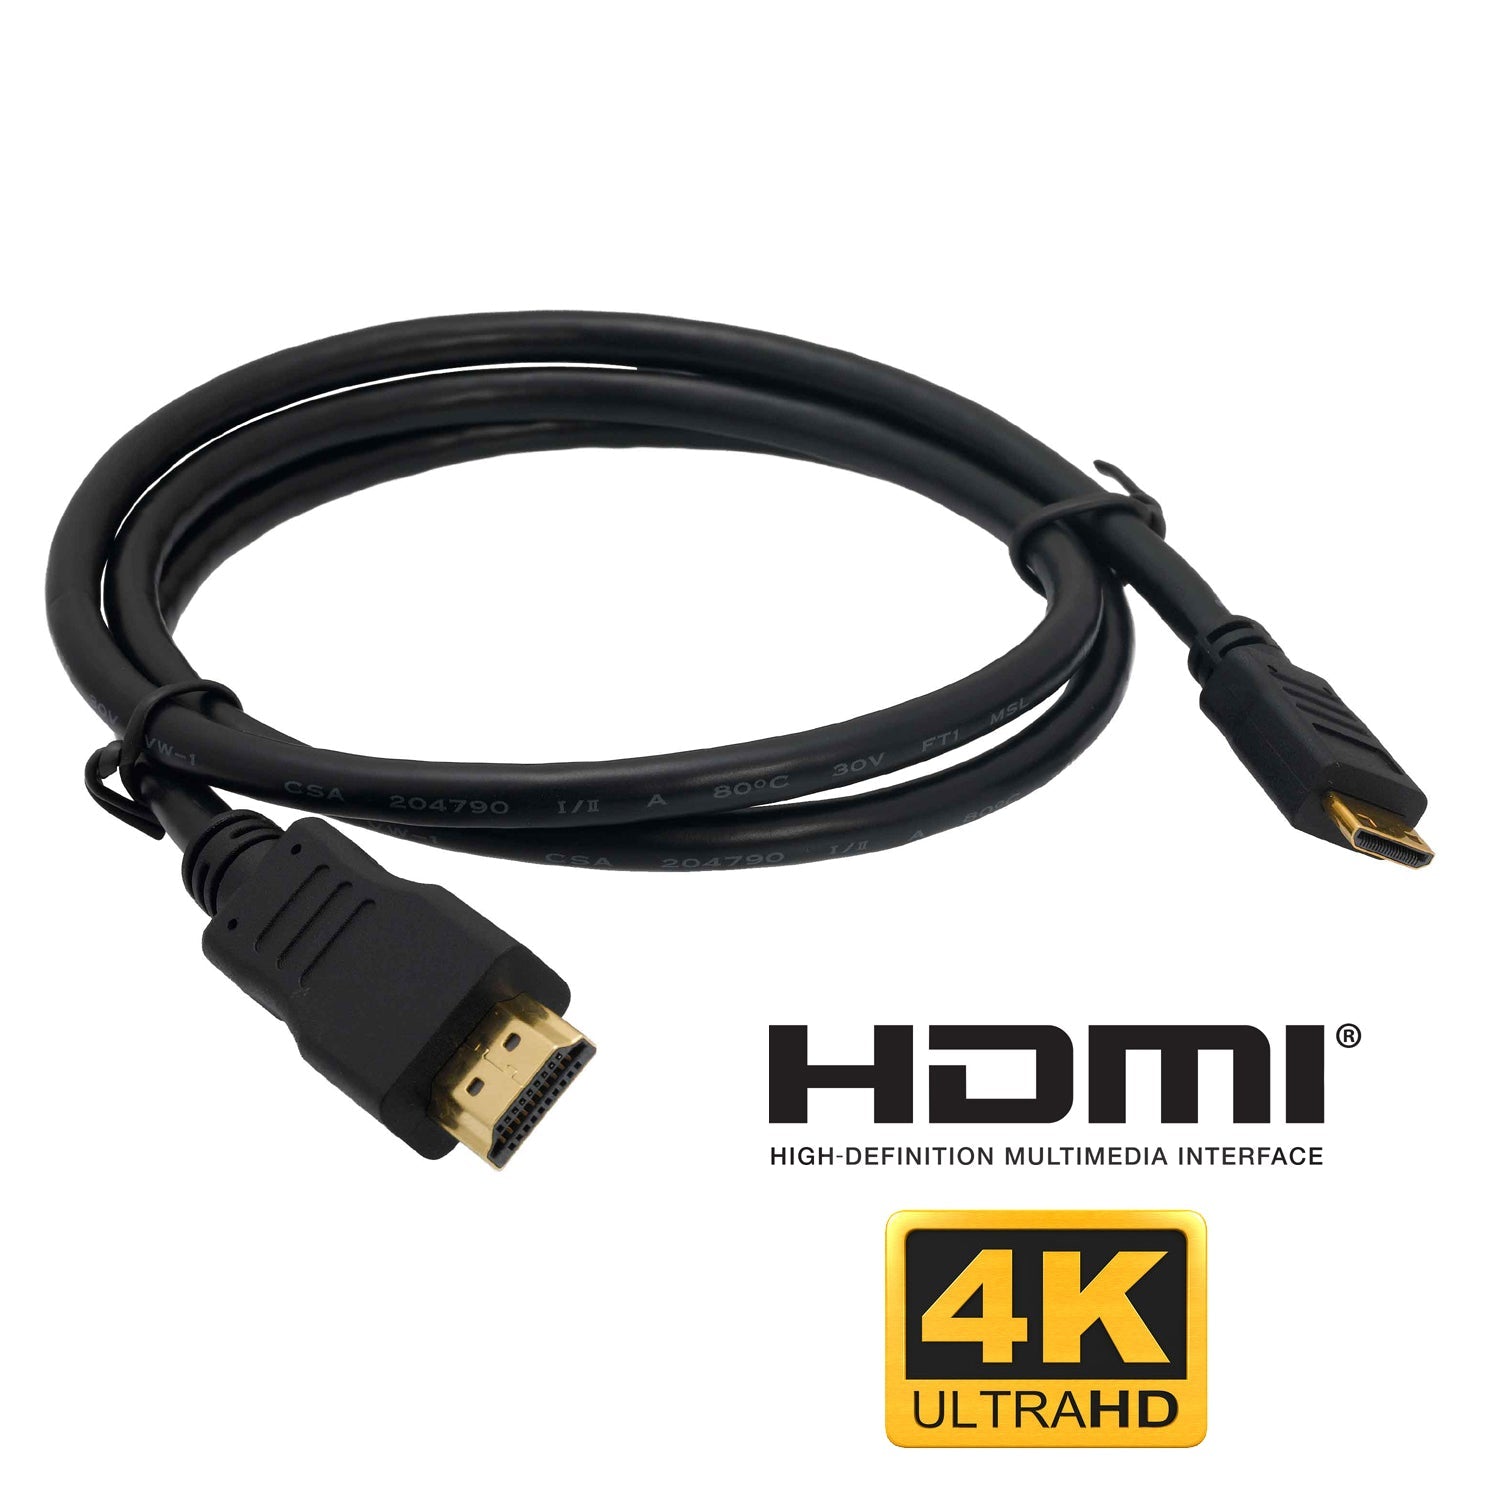 12m HDMI 4K UHD Audio Video Cable